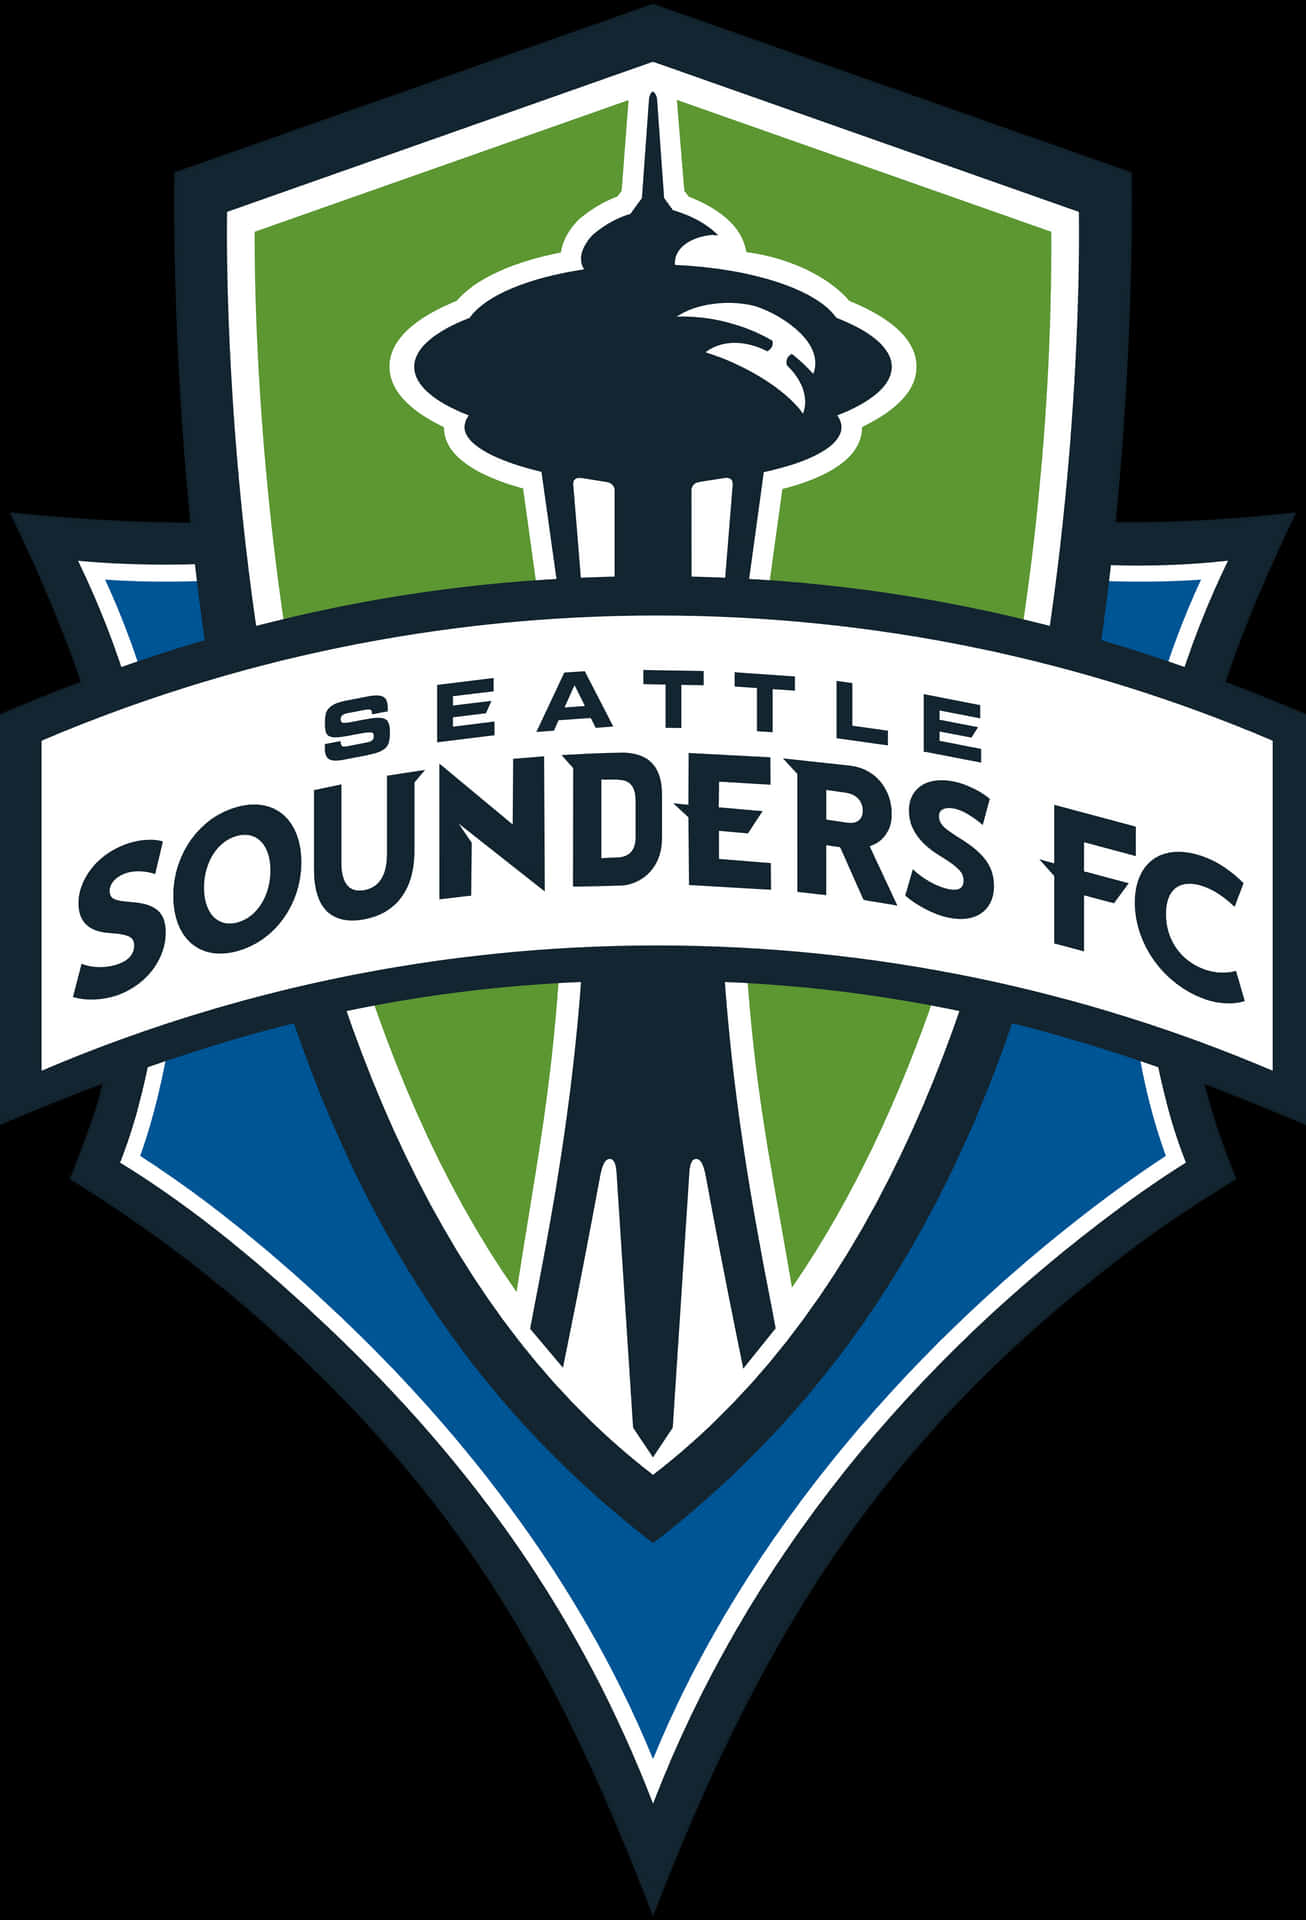 Seattle Sounders FC American Football Club Wallpaper